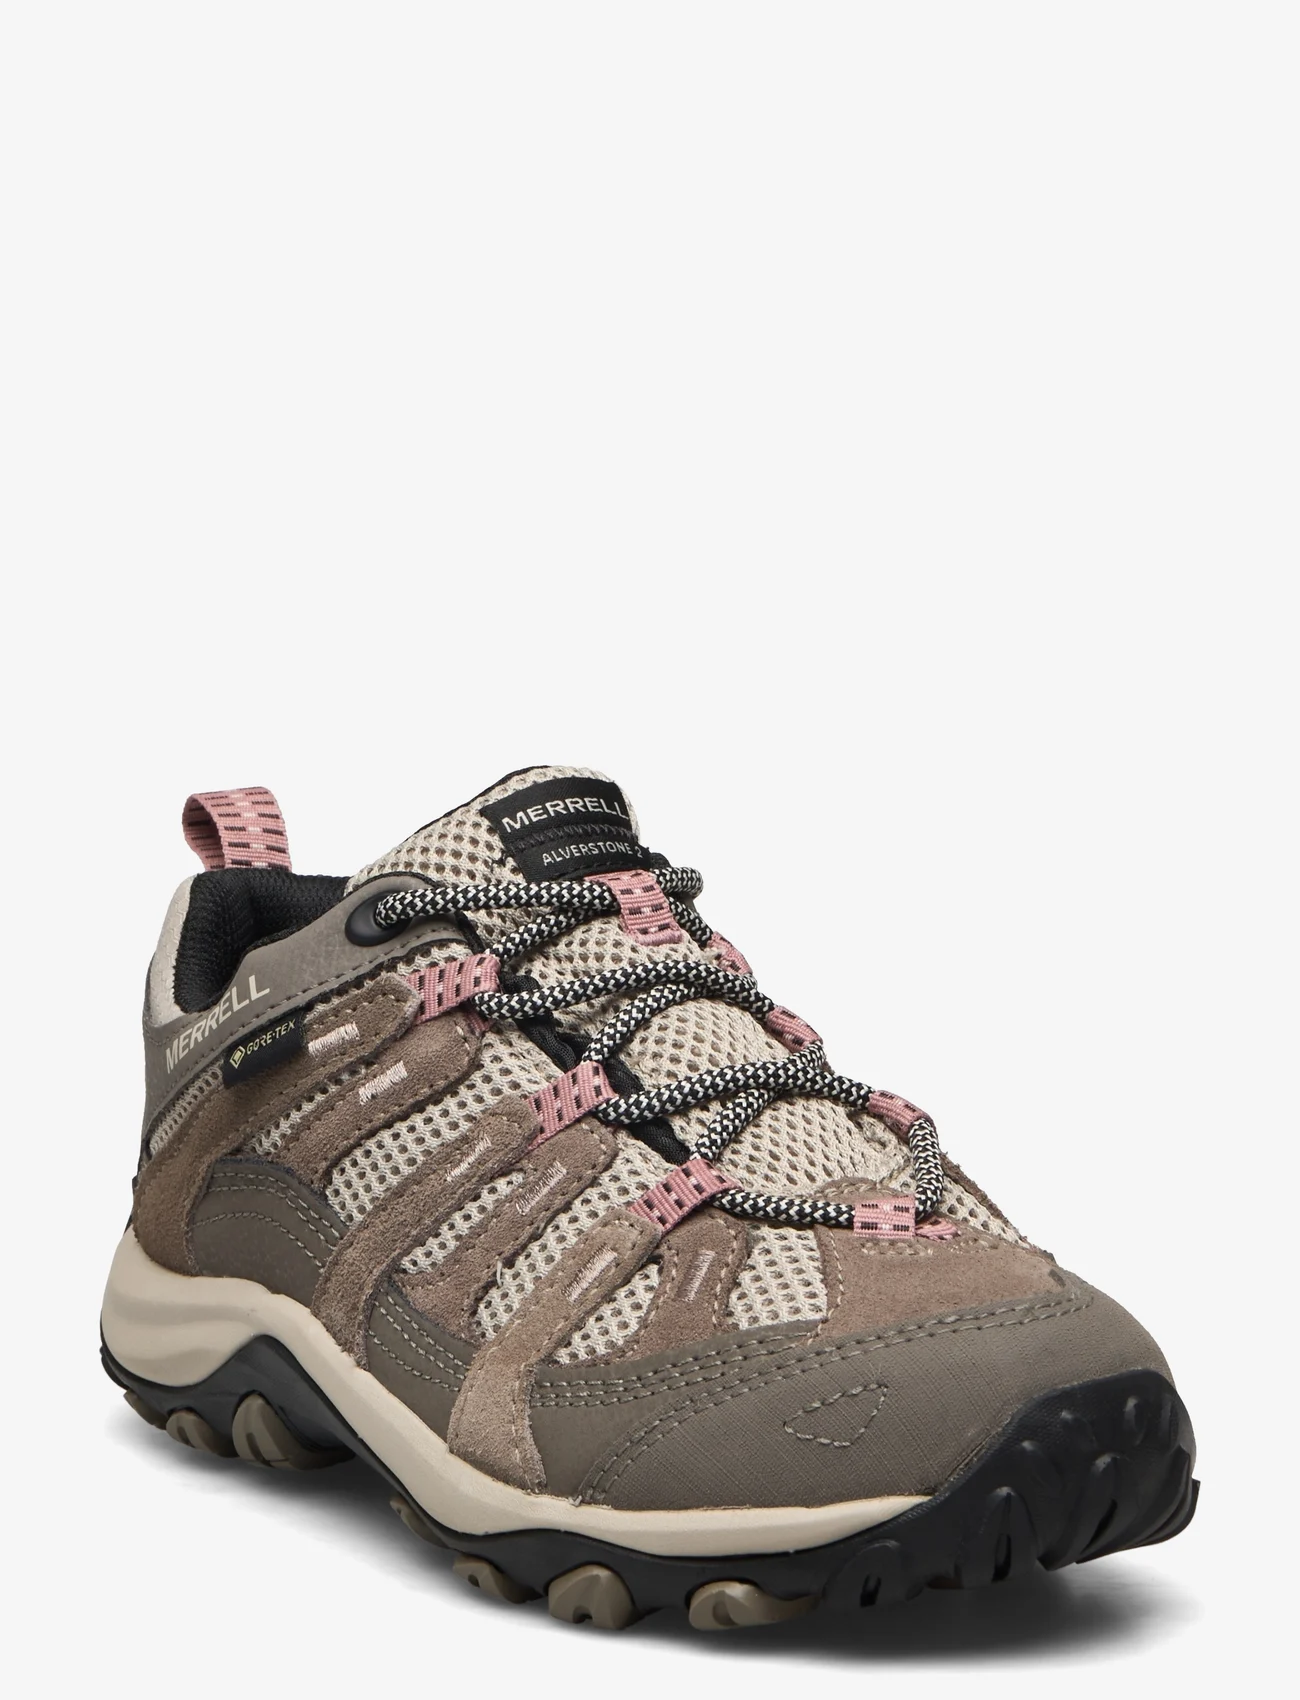 Merrell - Women's Alverstone 2 GTX - Aluminum - hiking shoes - aluminum - 0